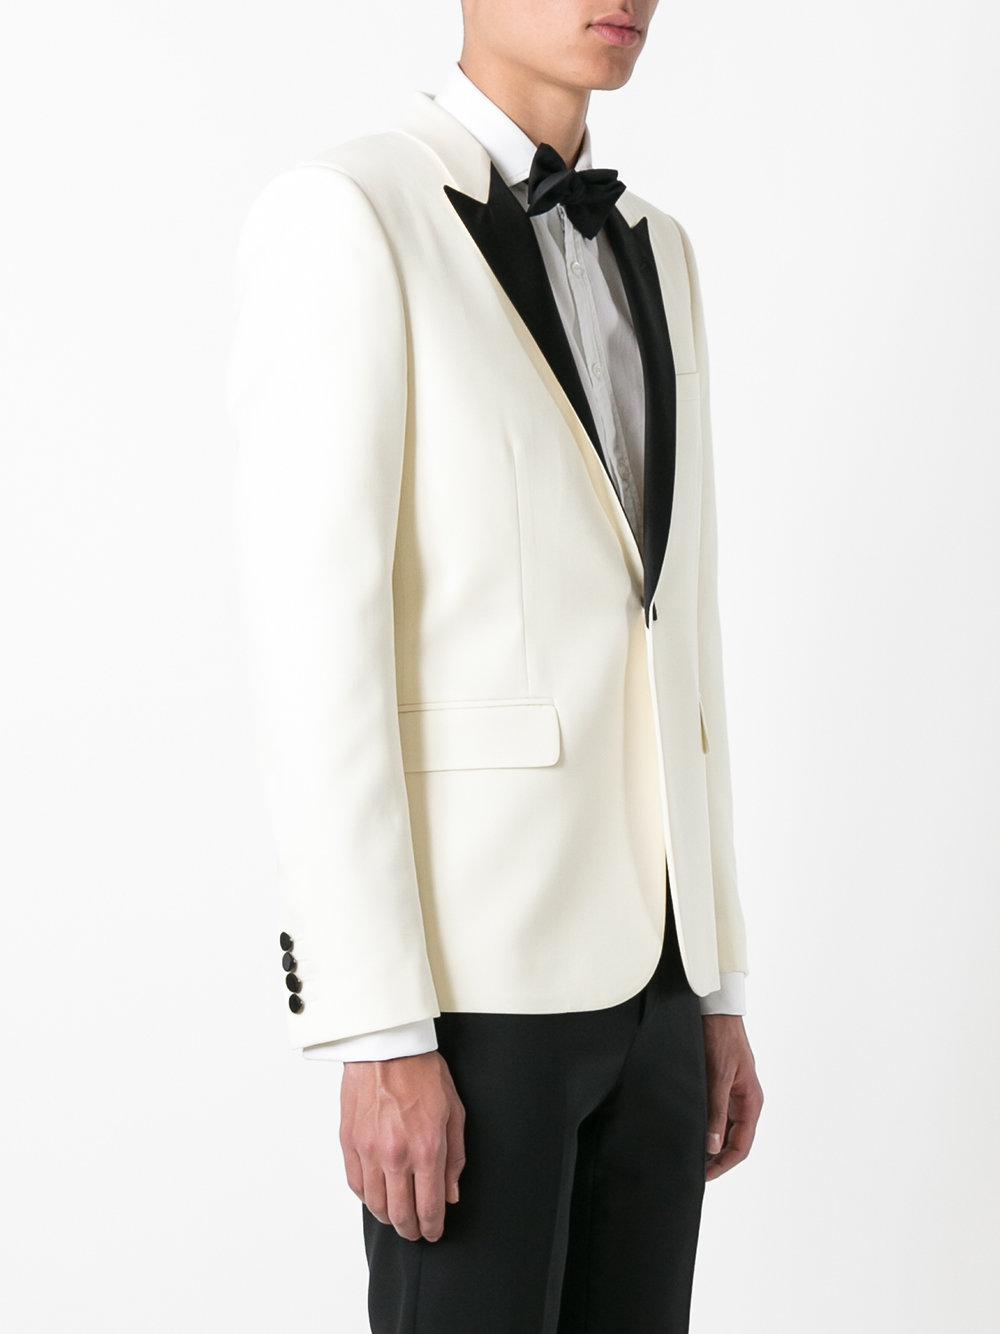 Saint Laurent White Suit Online, 57% OFF | www.propellermadrid.com